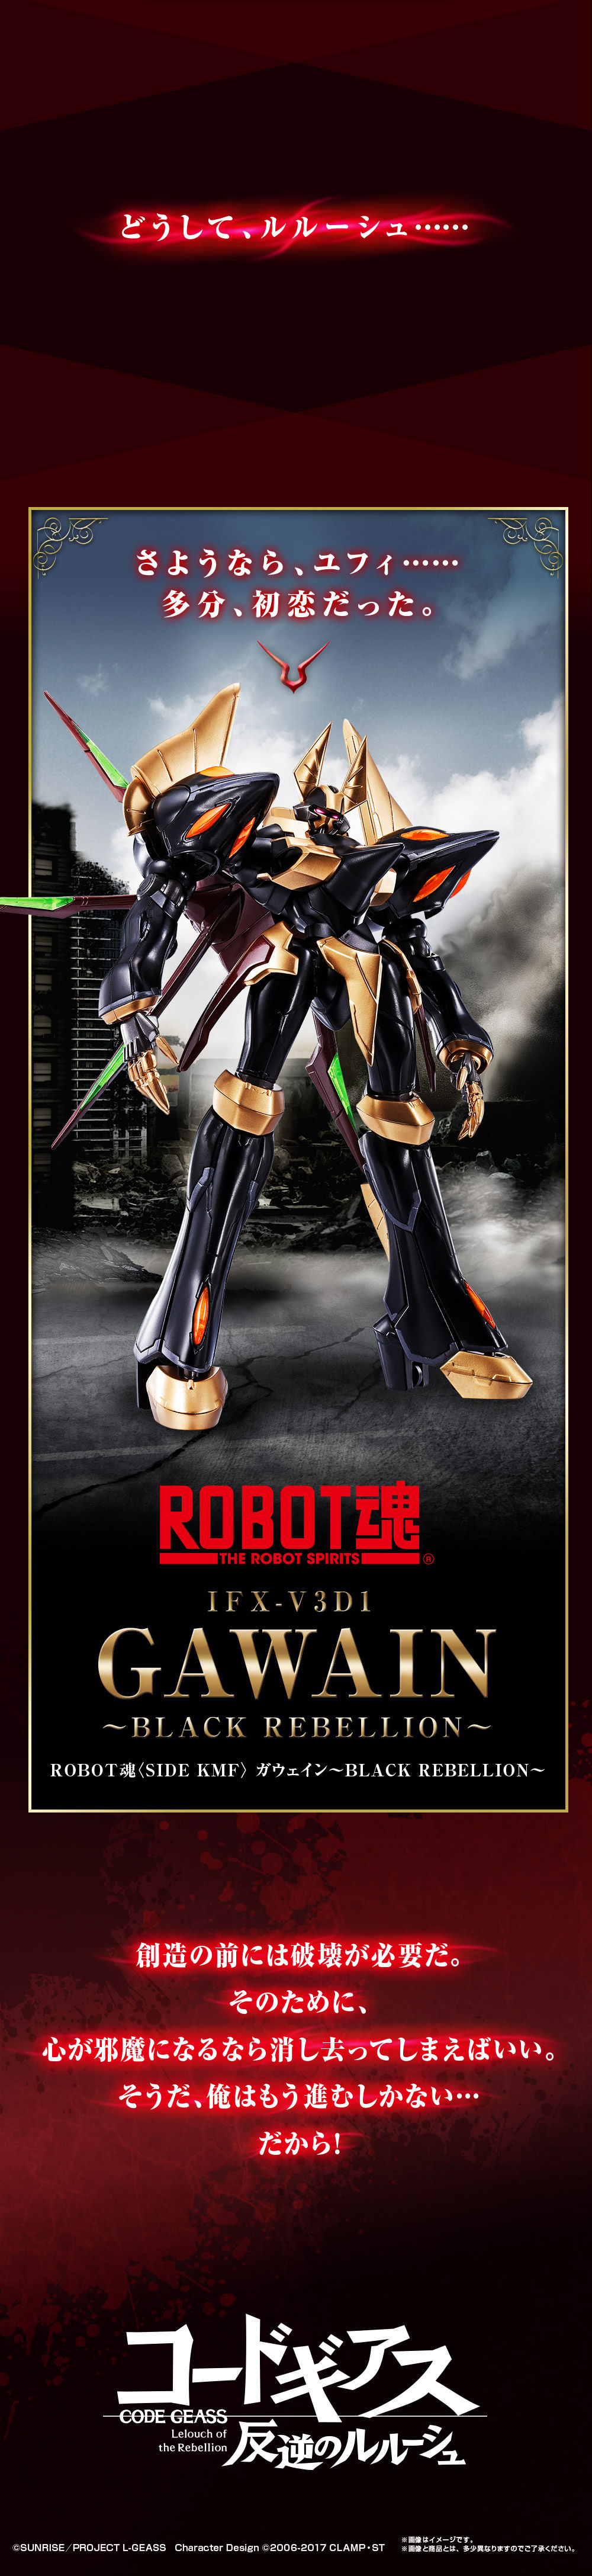 Robot魂 Side Kmf ガウェイン Black Rebellion 趣味 コレクション プレミアムバンダイ公式通販